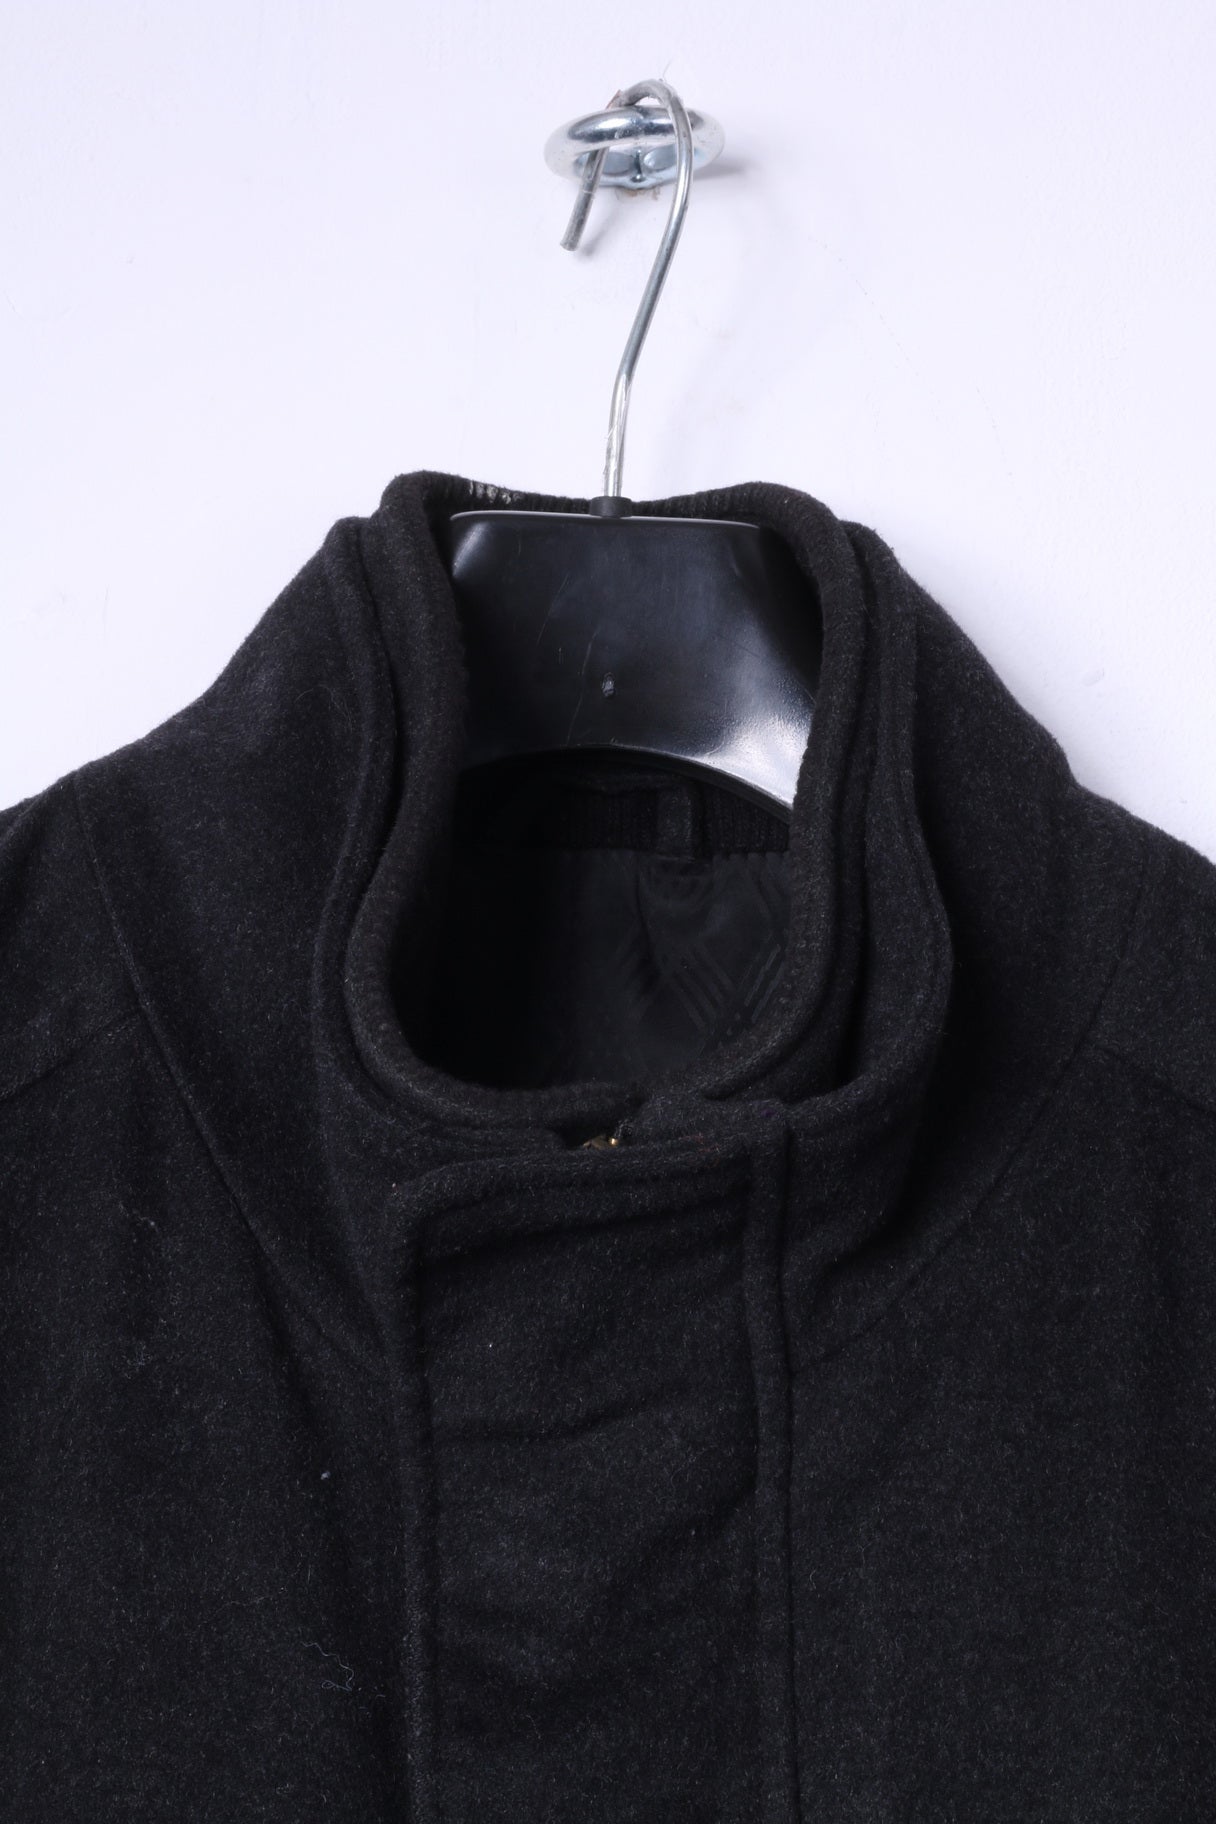 Jeff Banks Mens L Coat Charcoal Full Zipper Classic Wool Cashmere Blend Top